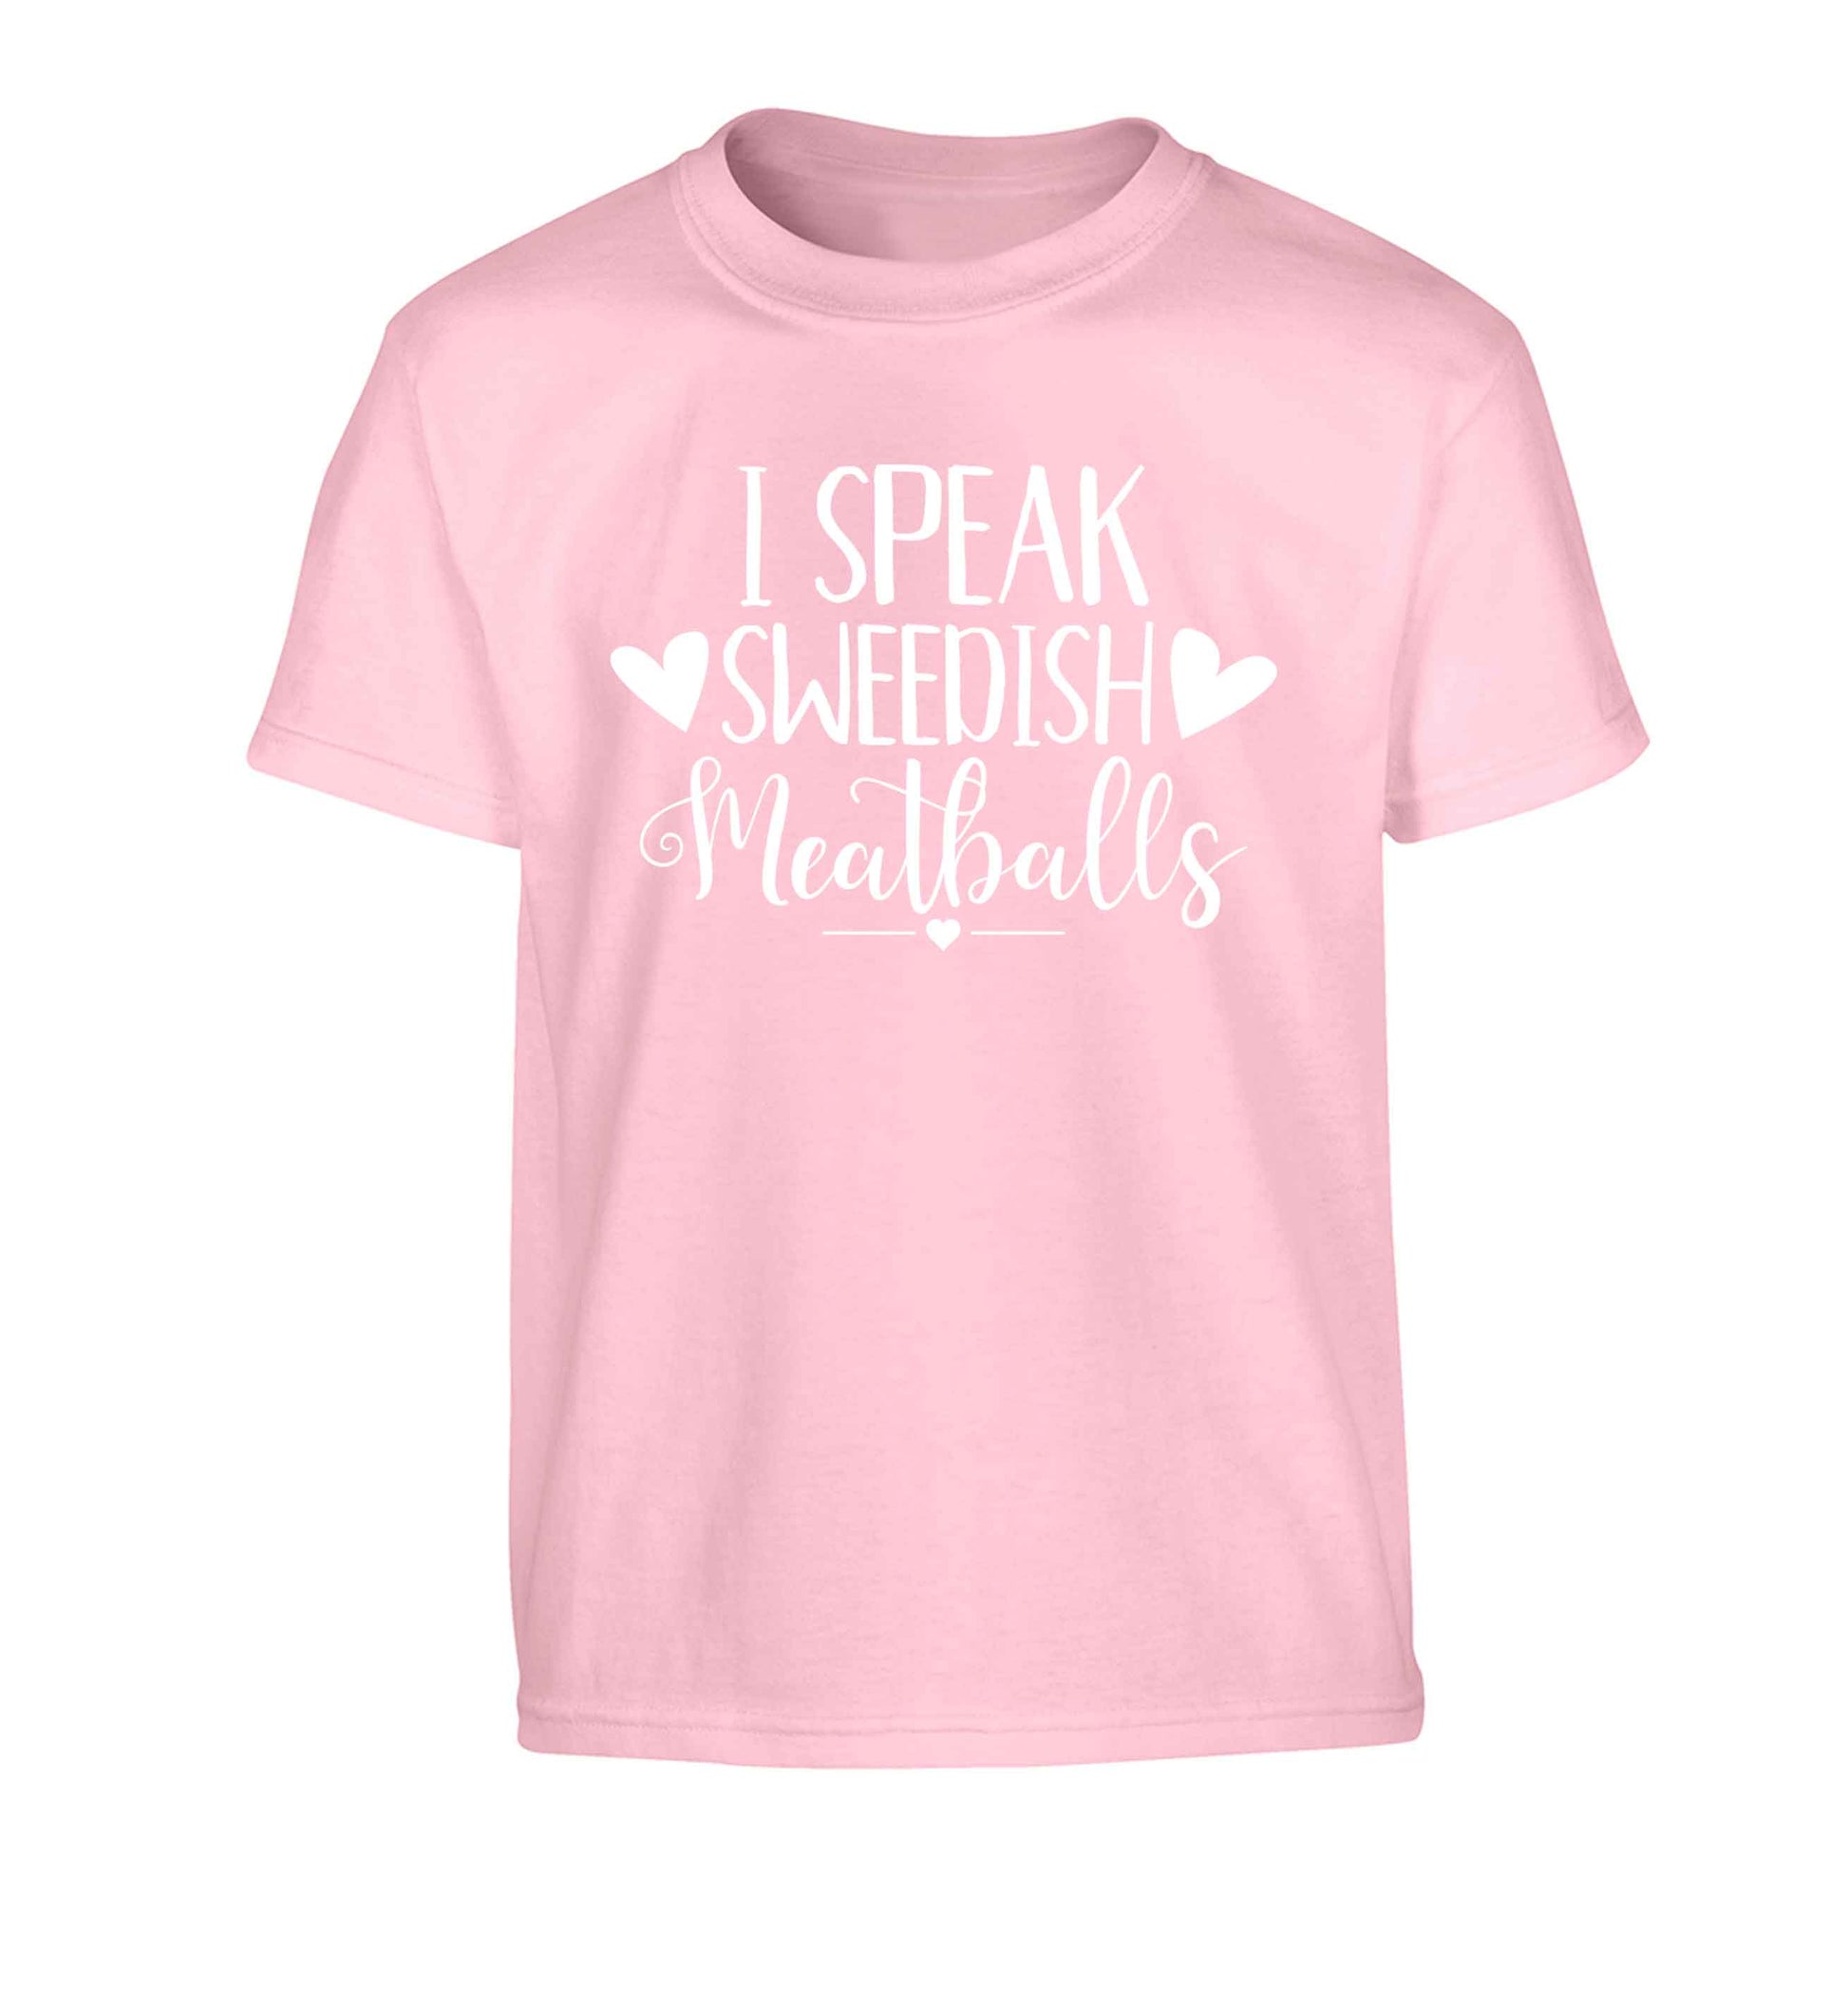 I speak sweedish...meatballs Children's light pink Tshirt 12-13 Years